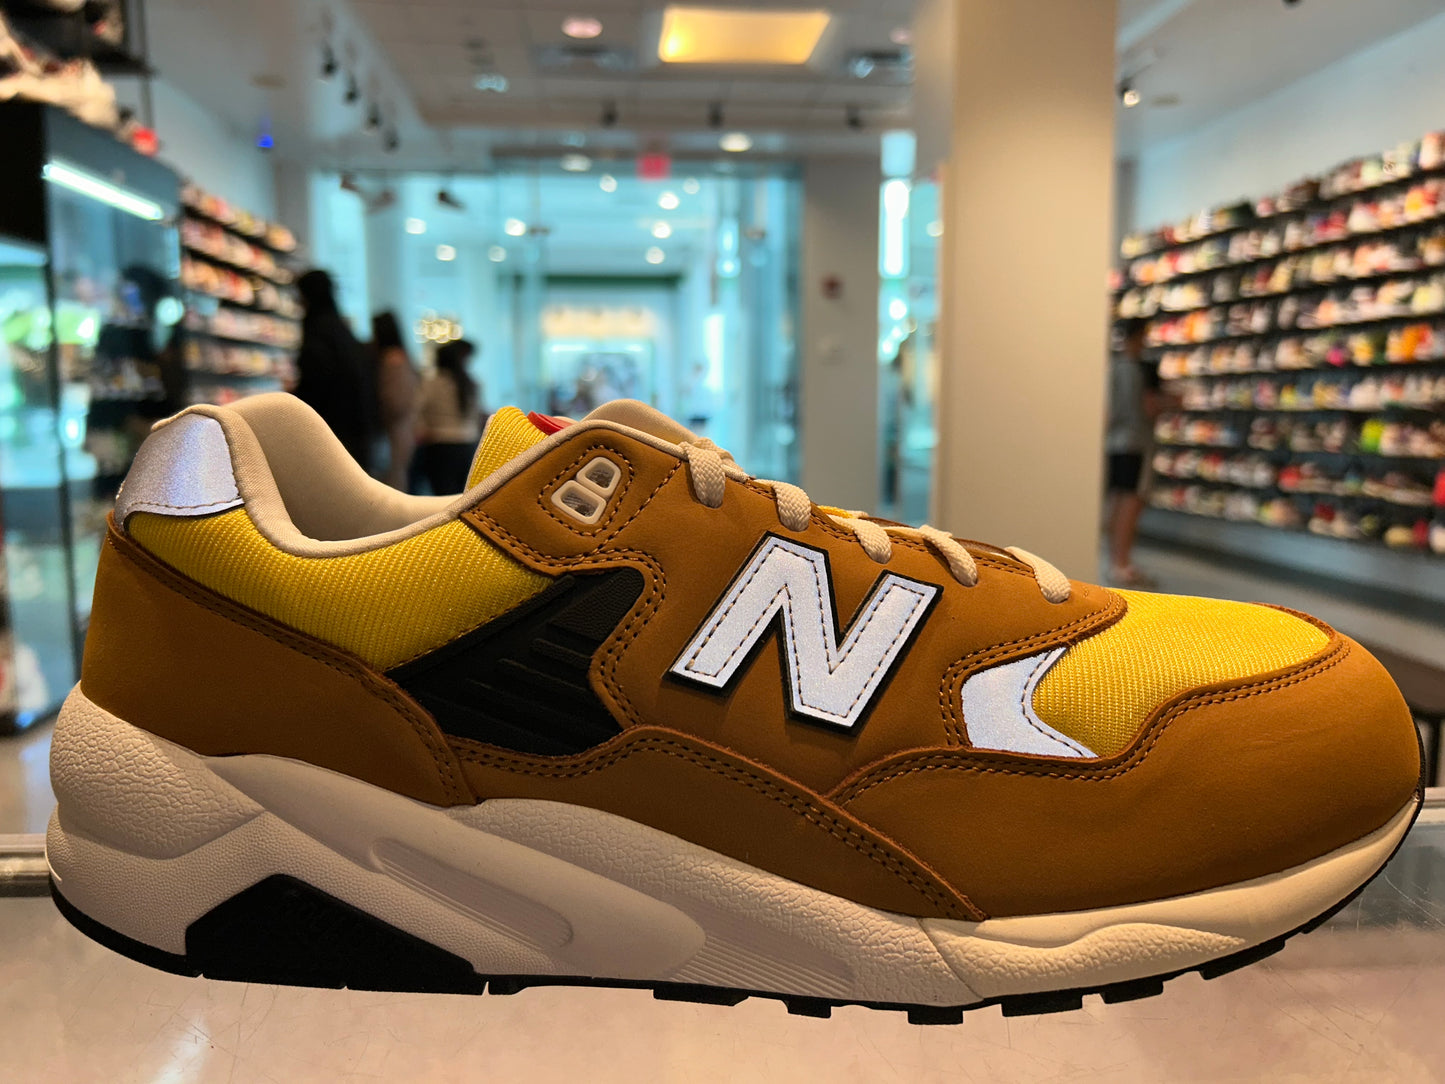 Size 13 New Balance 580 “Brown Yellow” Brand New (Mall)